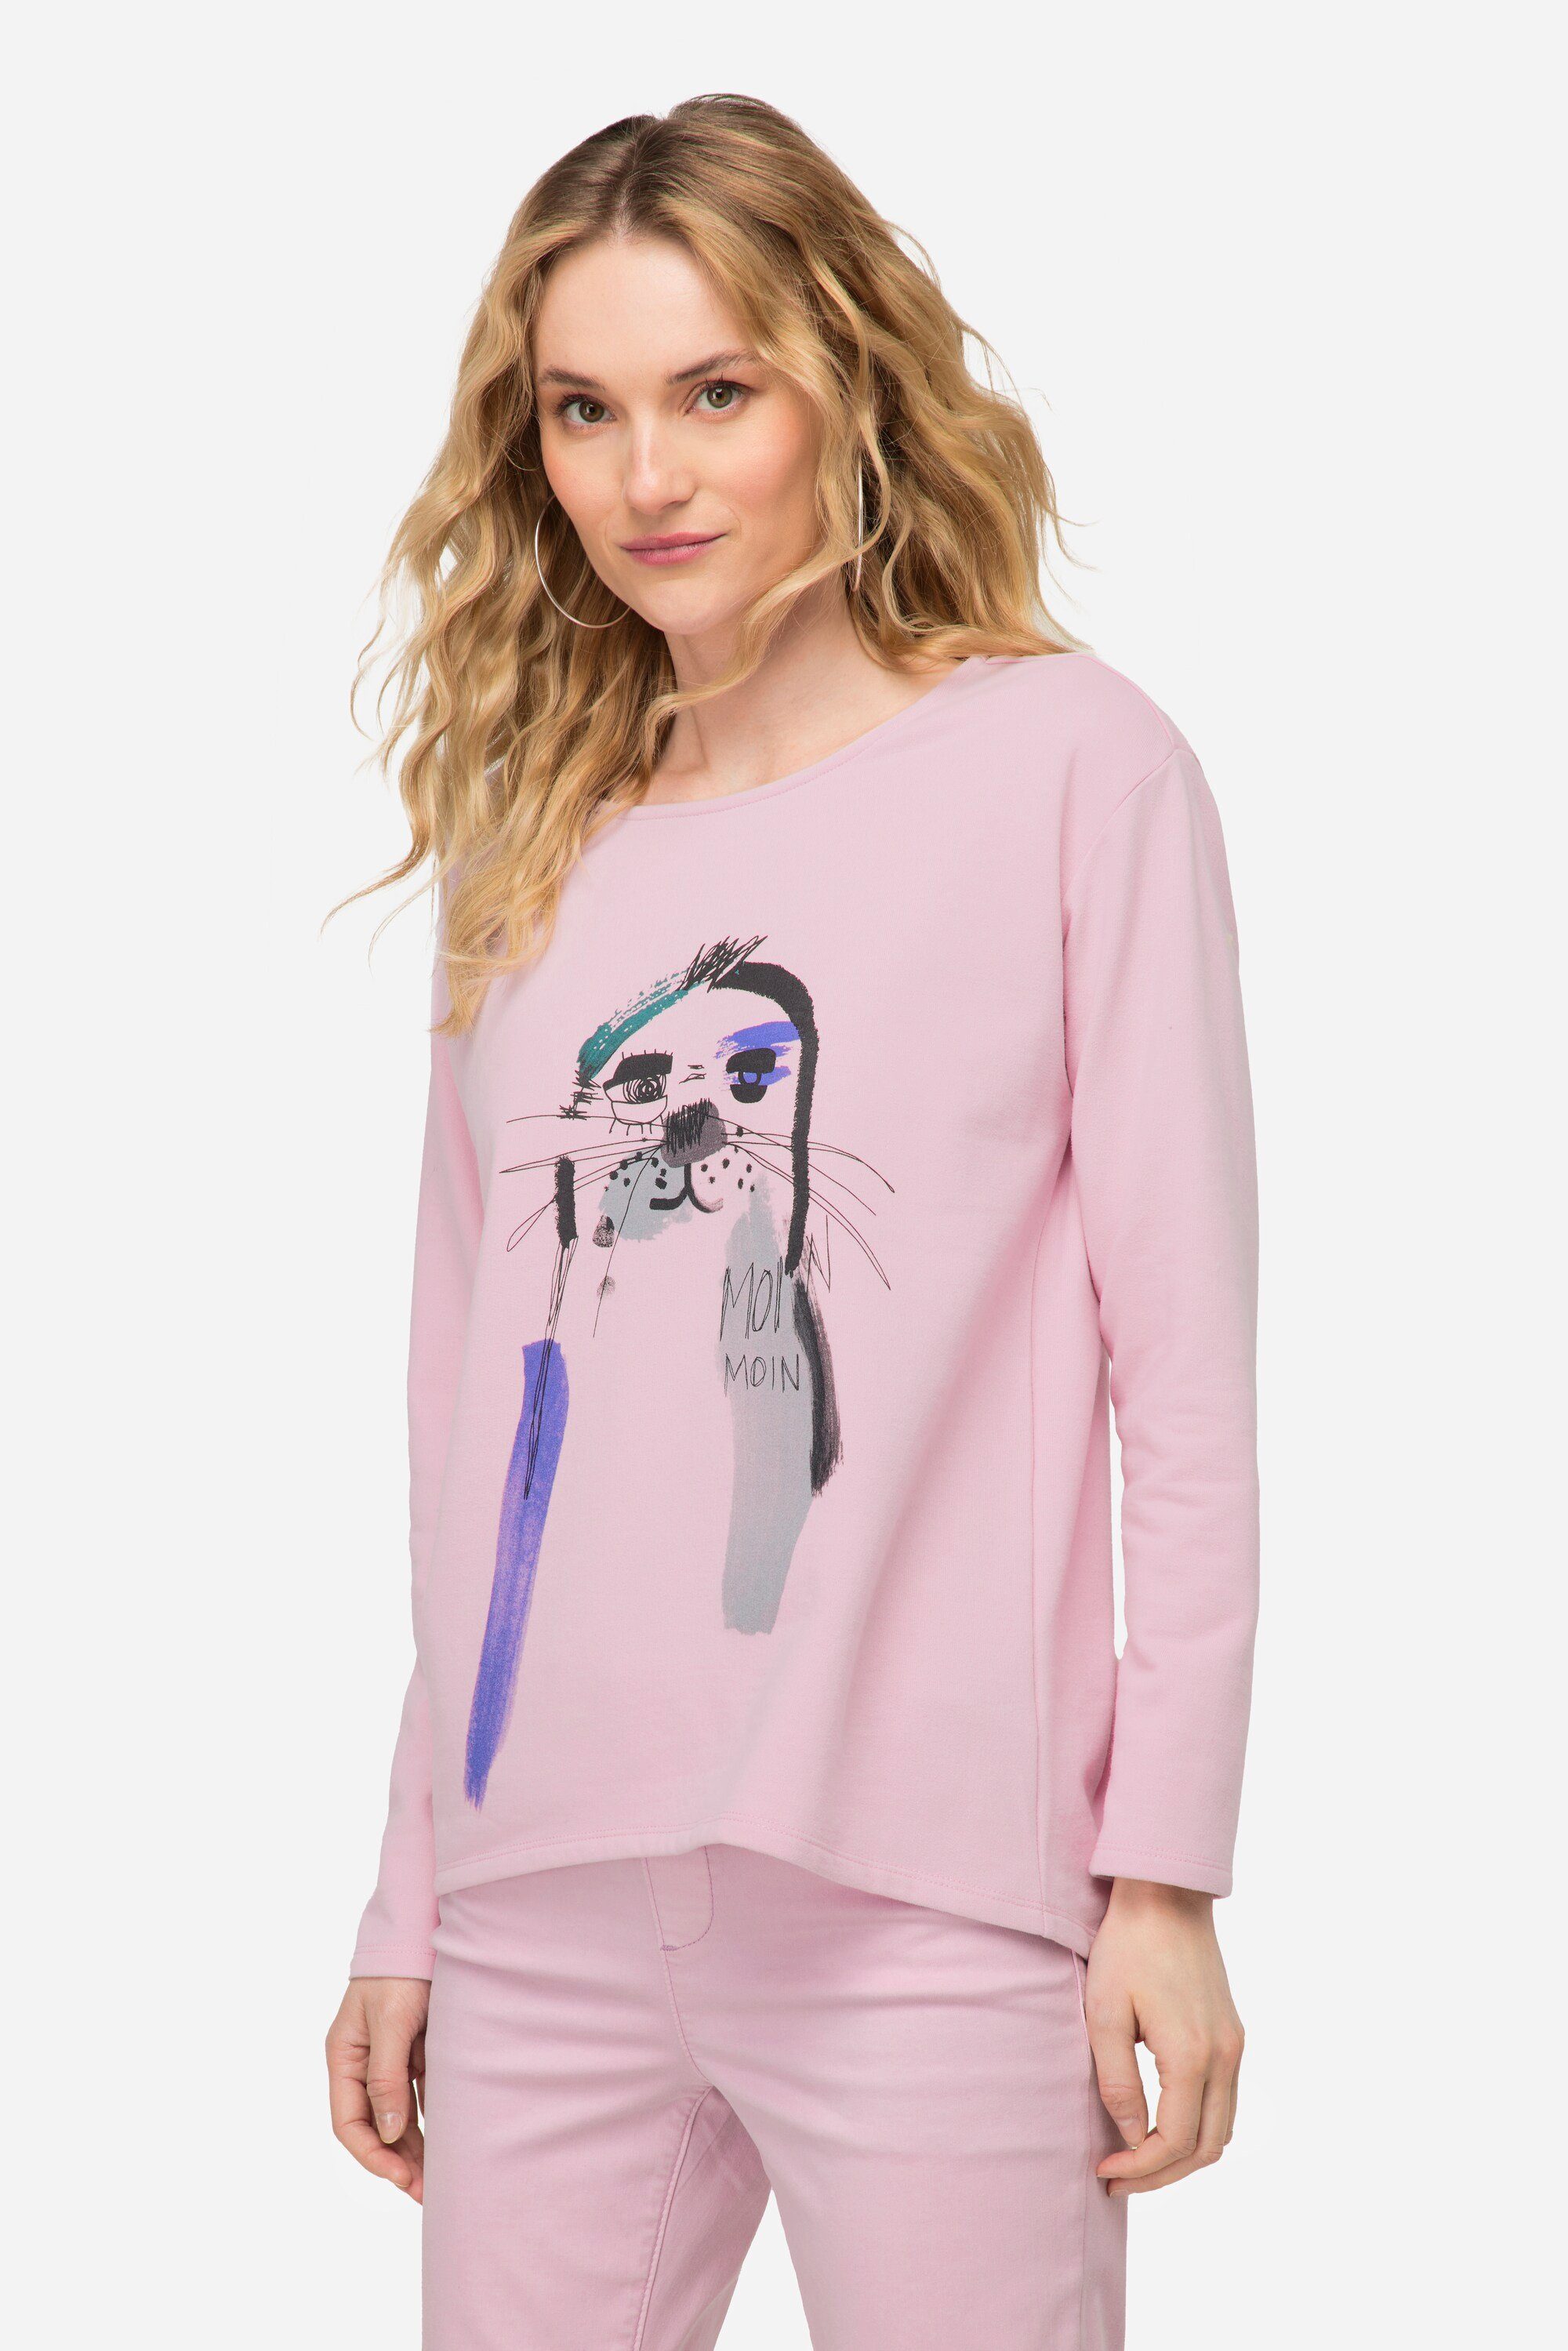 Laurasøn Sweatshirt Sweatshirt oversized Robben Print Rundhals Langarm Rosa